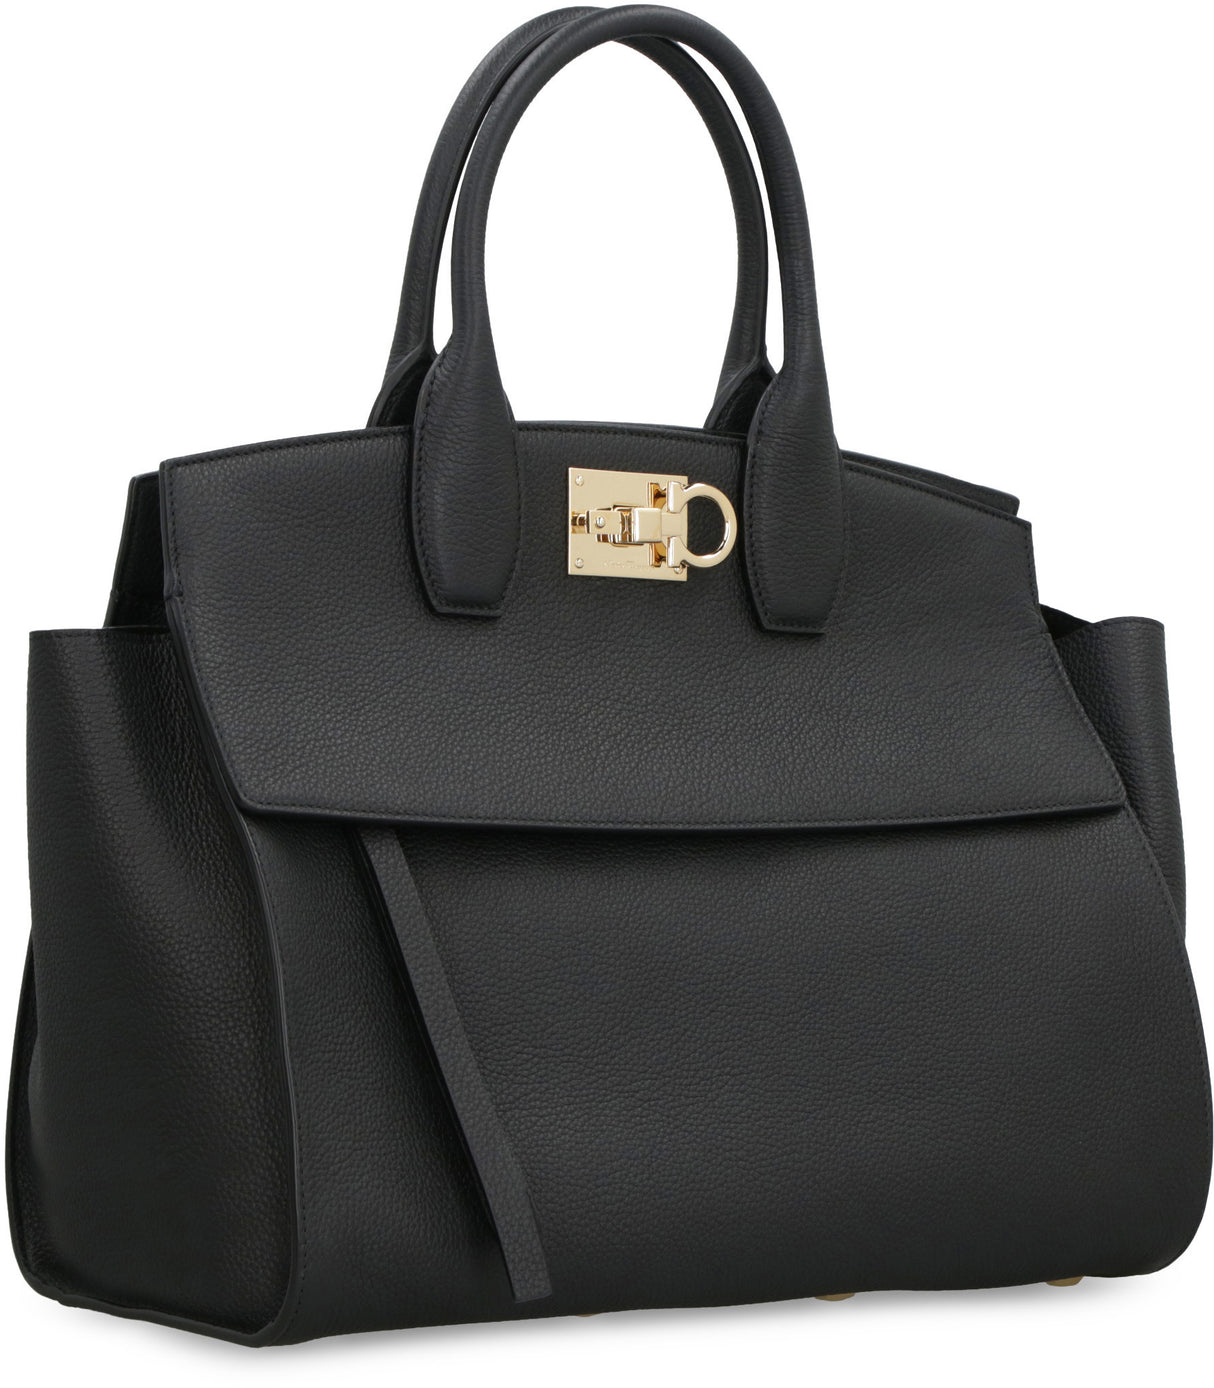 FERRAGAMO Studio Soft Leather Handbag - Black Calfskin, Gold-Tone Hardware, Adjustable Strap